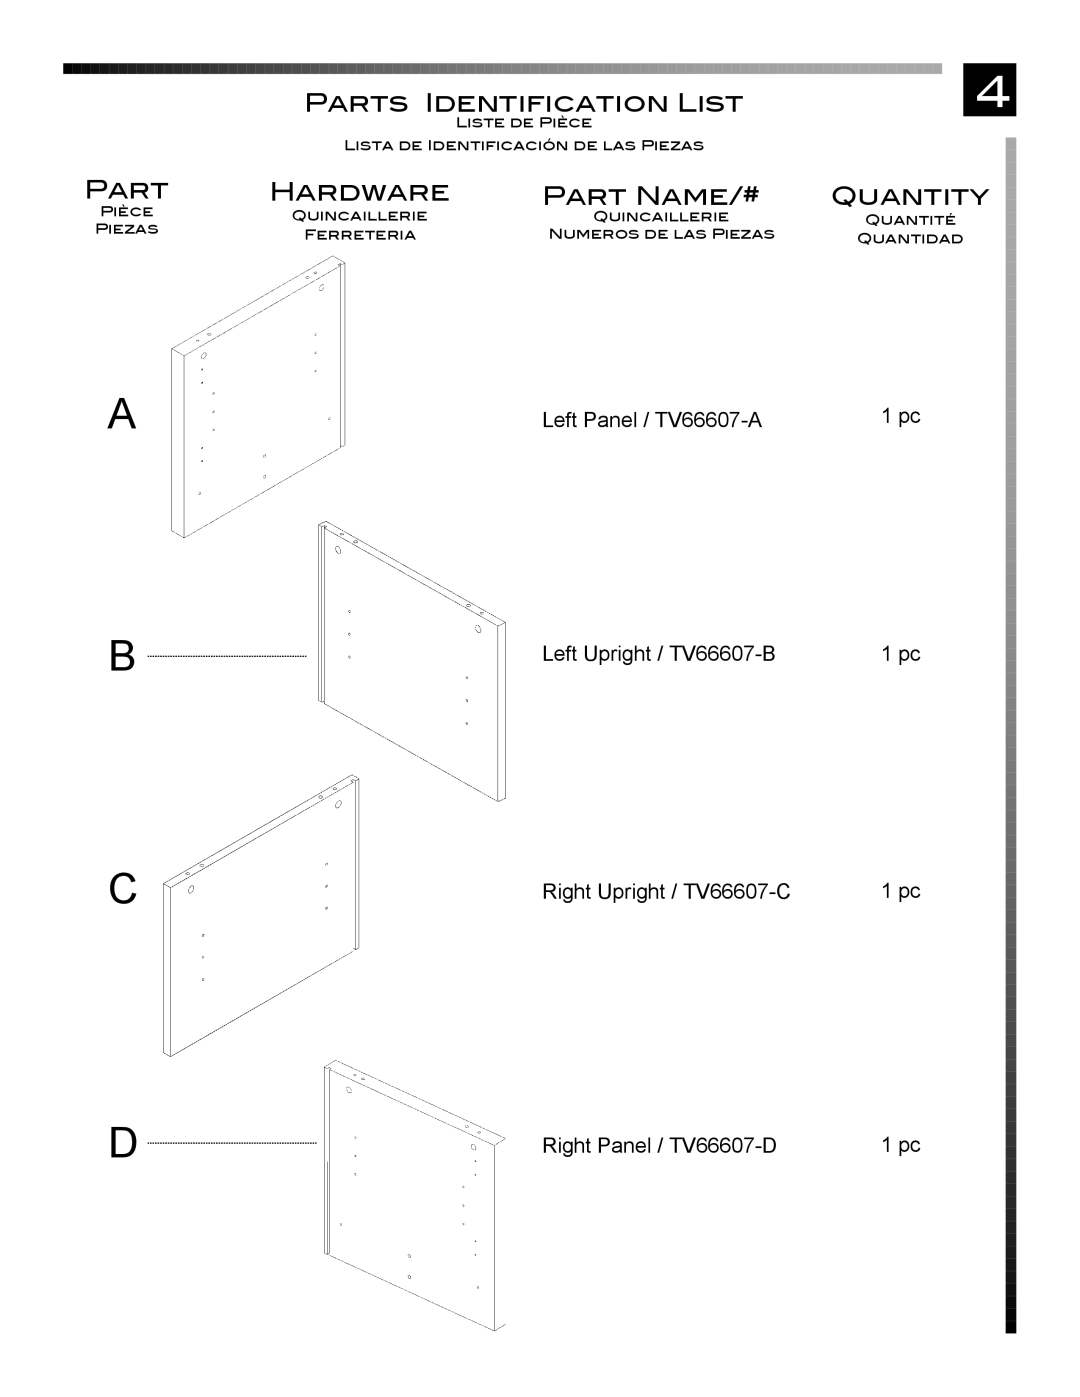 Pinnacle Design A B C, Left Panel / TV66607-A Left Upright / TV66607-B, Right Upright / TV66607-C, 1 pc 1 pc 1 pc, Part 